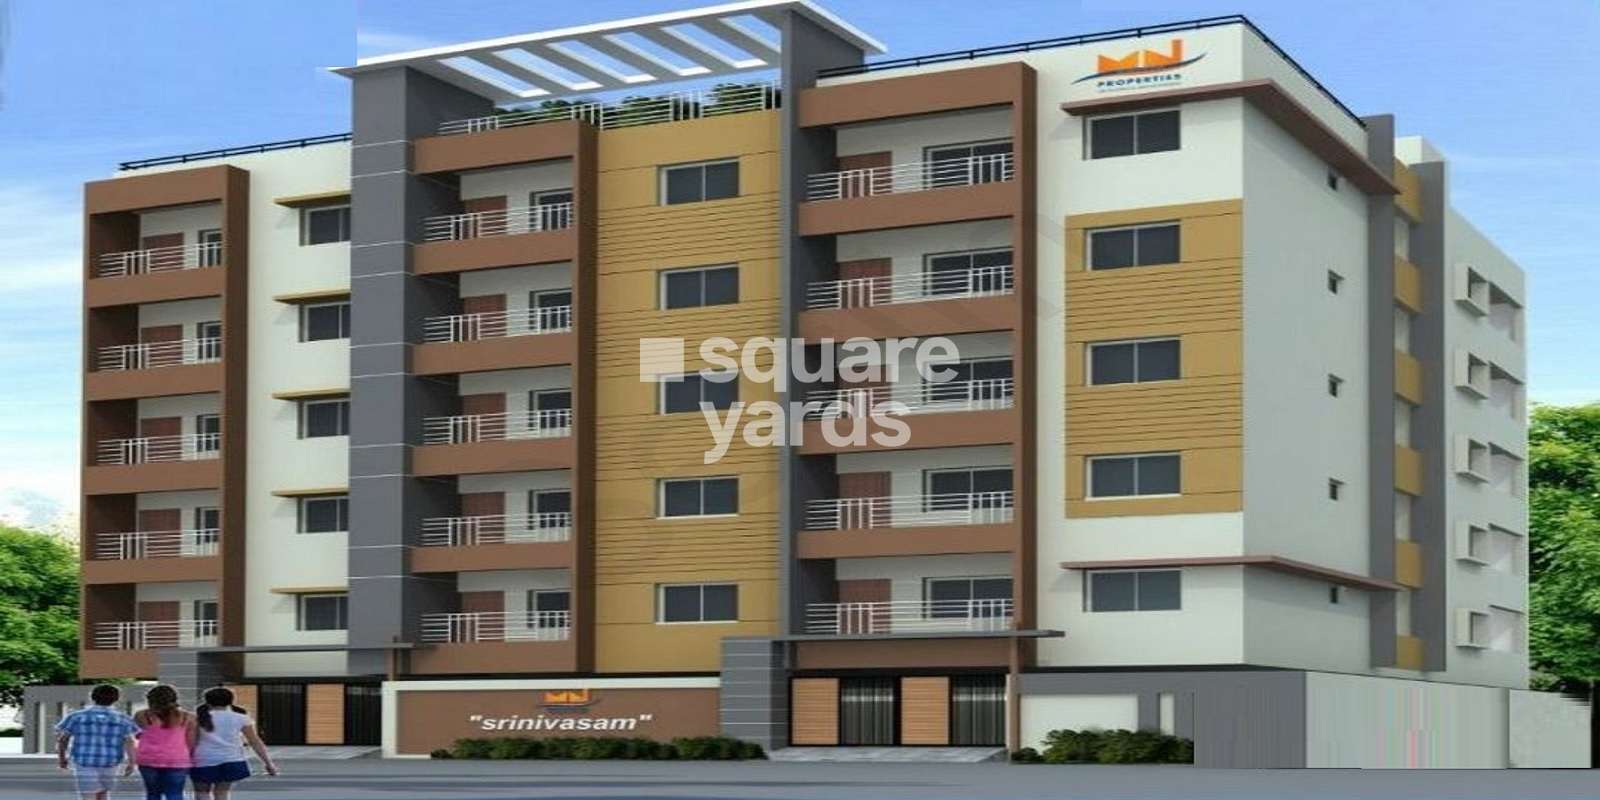 MN Srinivasam Apartments Cover Image